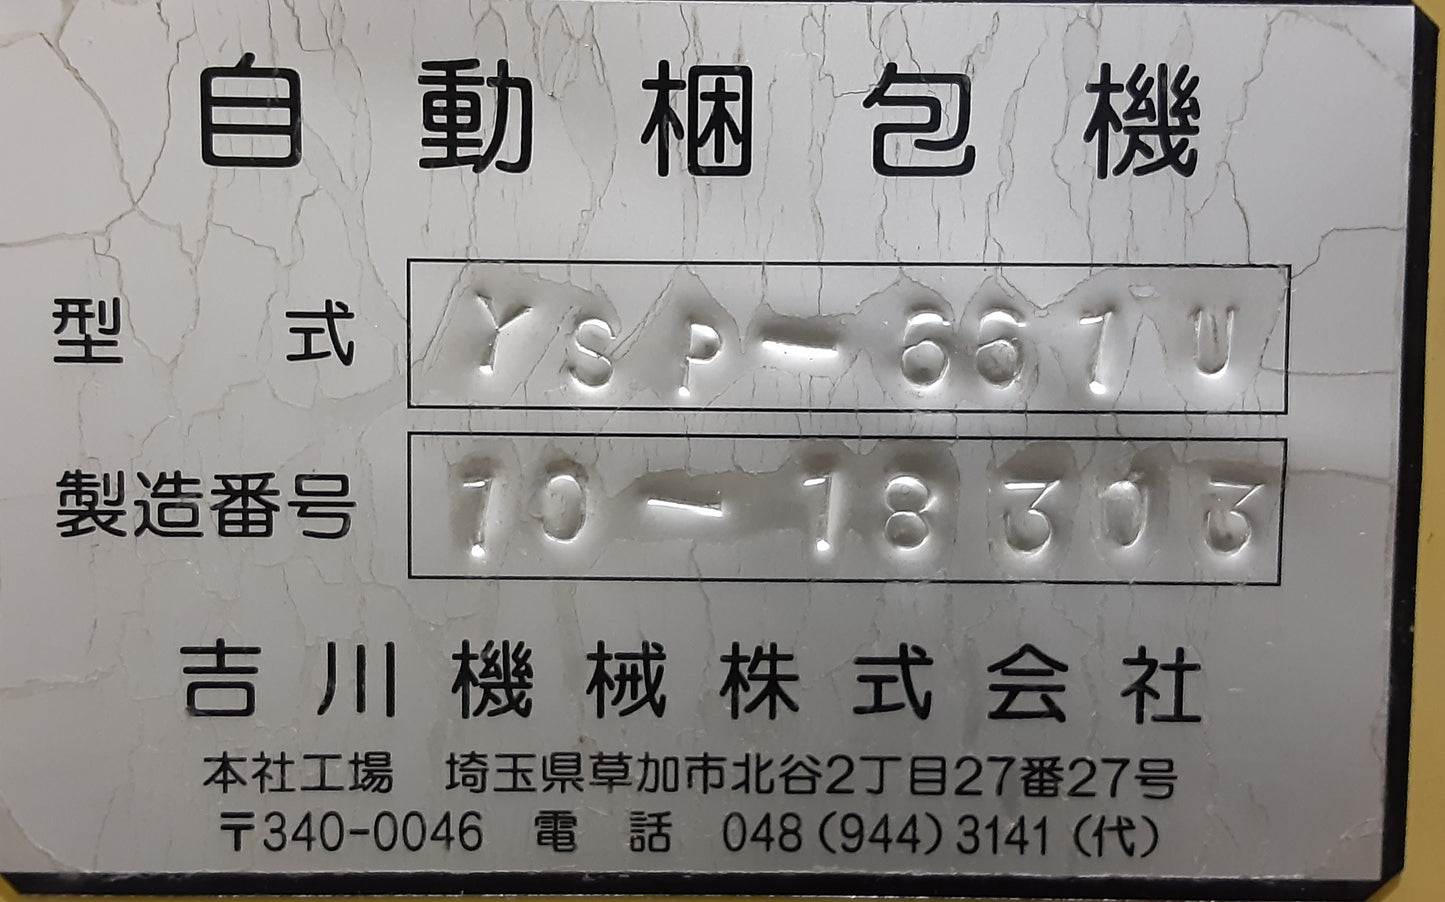 PPバンド結束機 半自動梱包機 YSP-661U 吉川機械 ストラパック(STRAPACK) yoshikawakikai1-ysp661u-4013